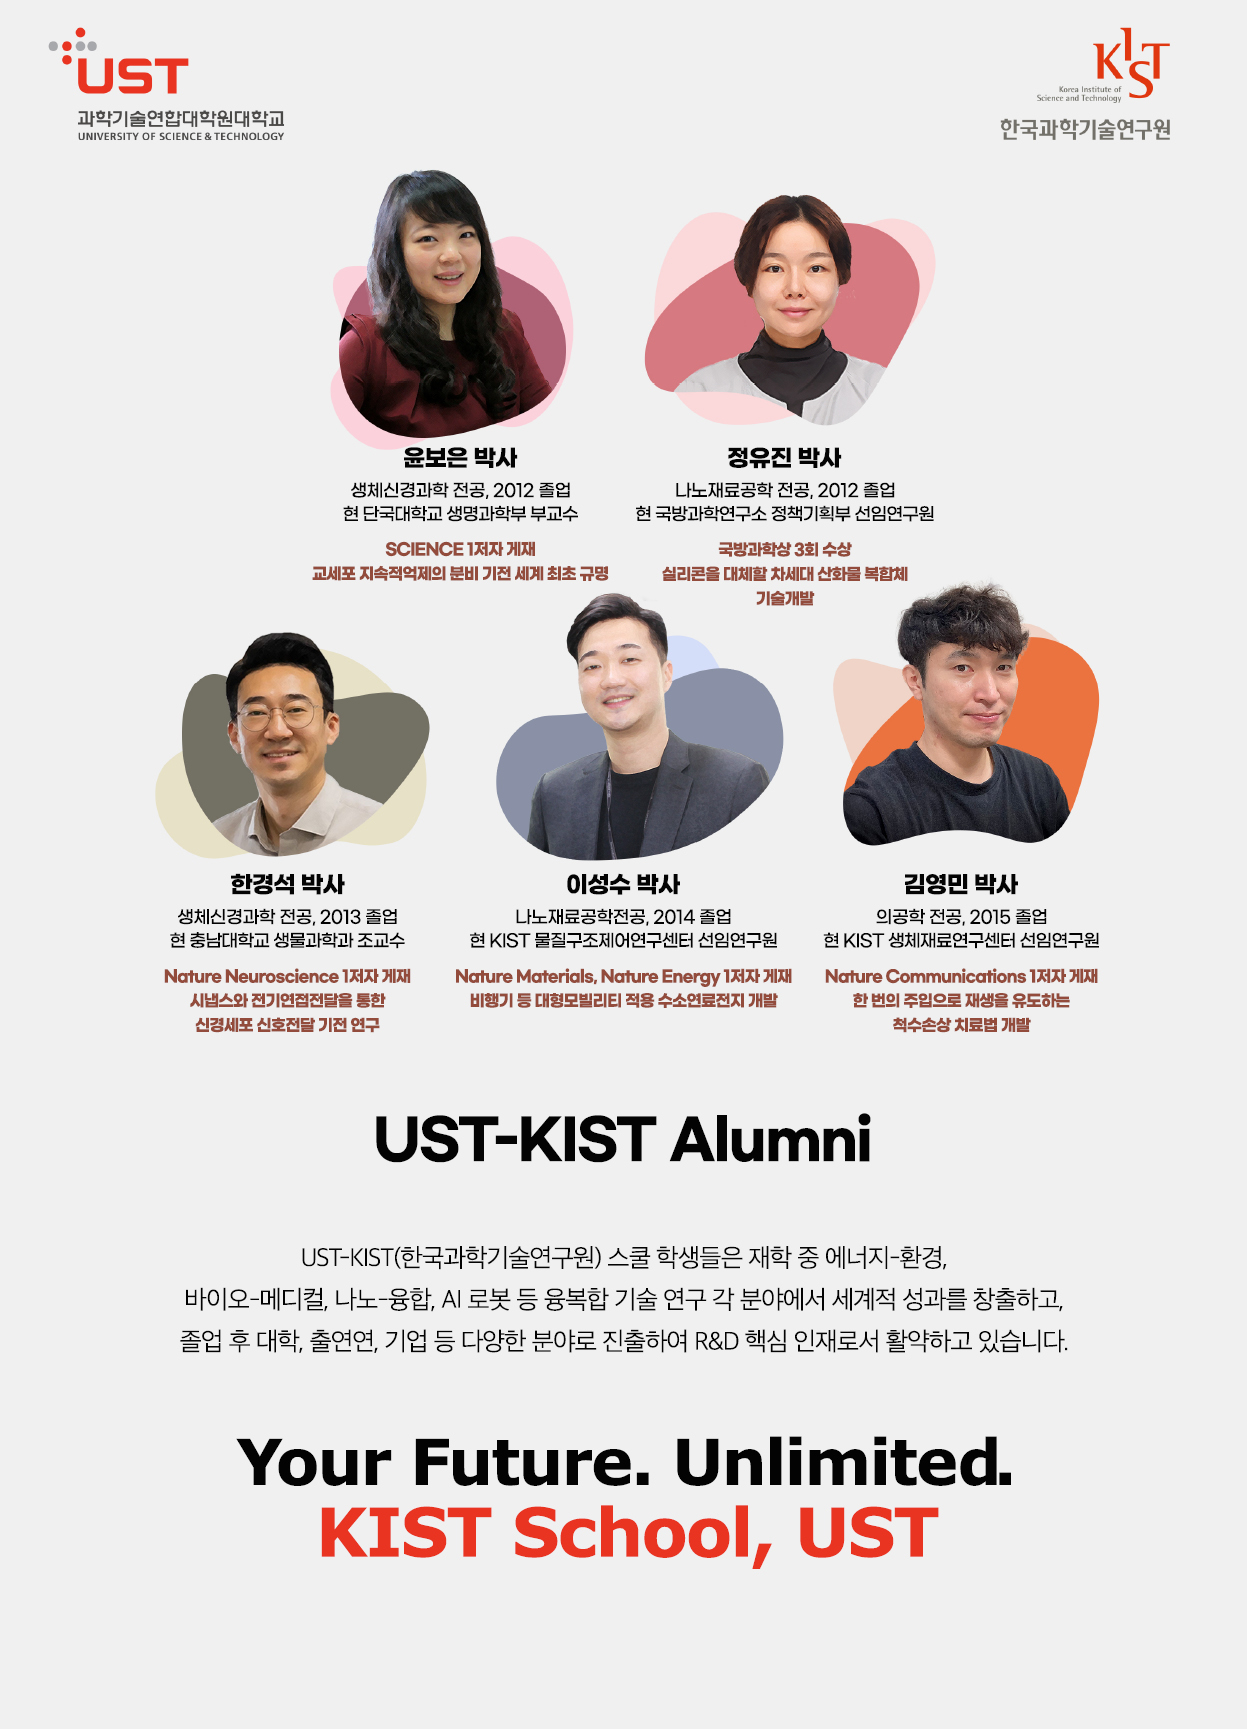 KIST 한국과학기술연구원 스쿨 포스터로 자세한내용은 하단에 위치해있습니다.